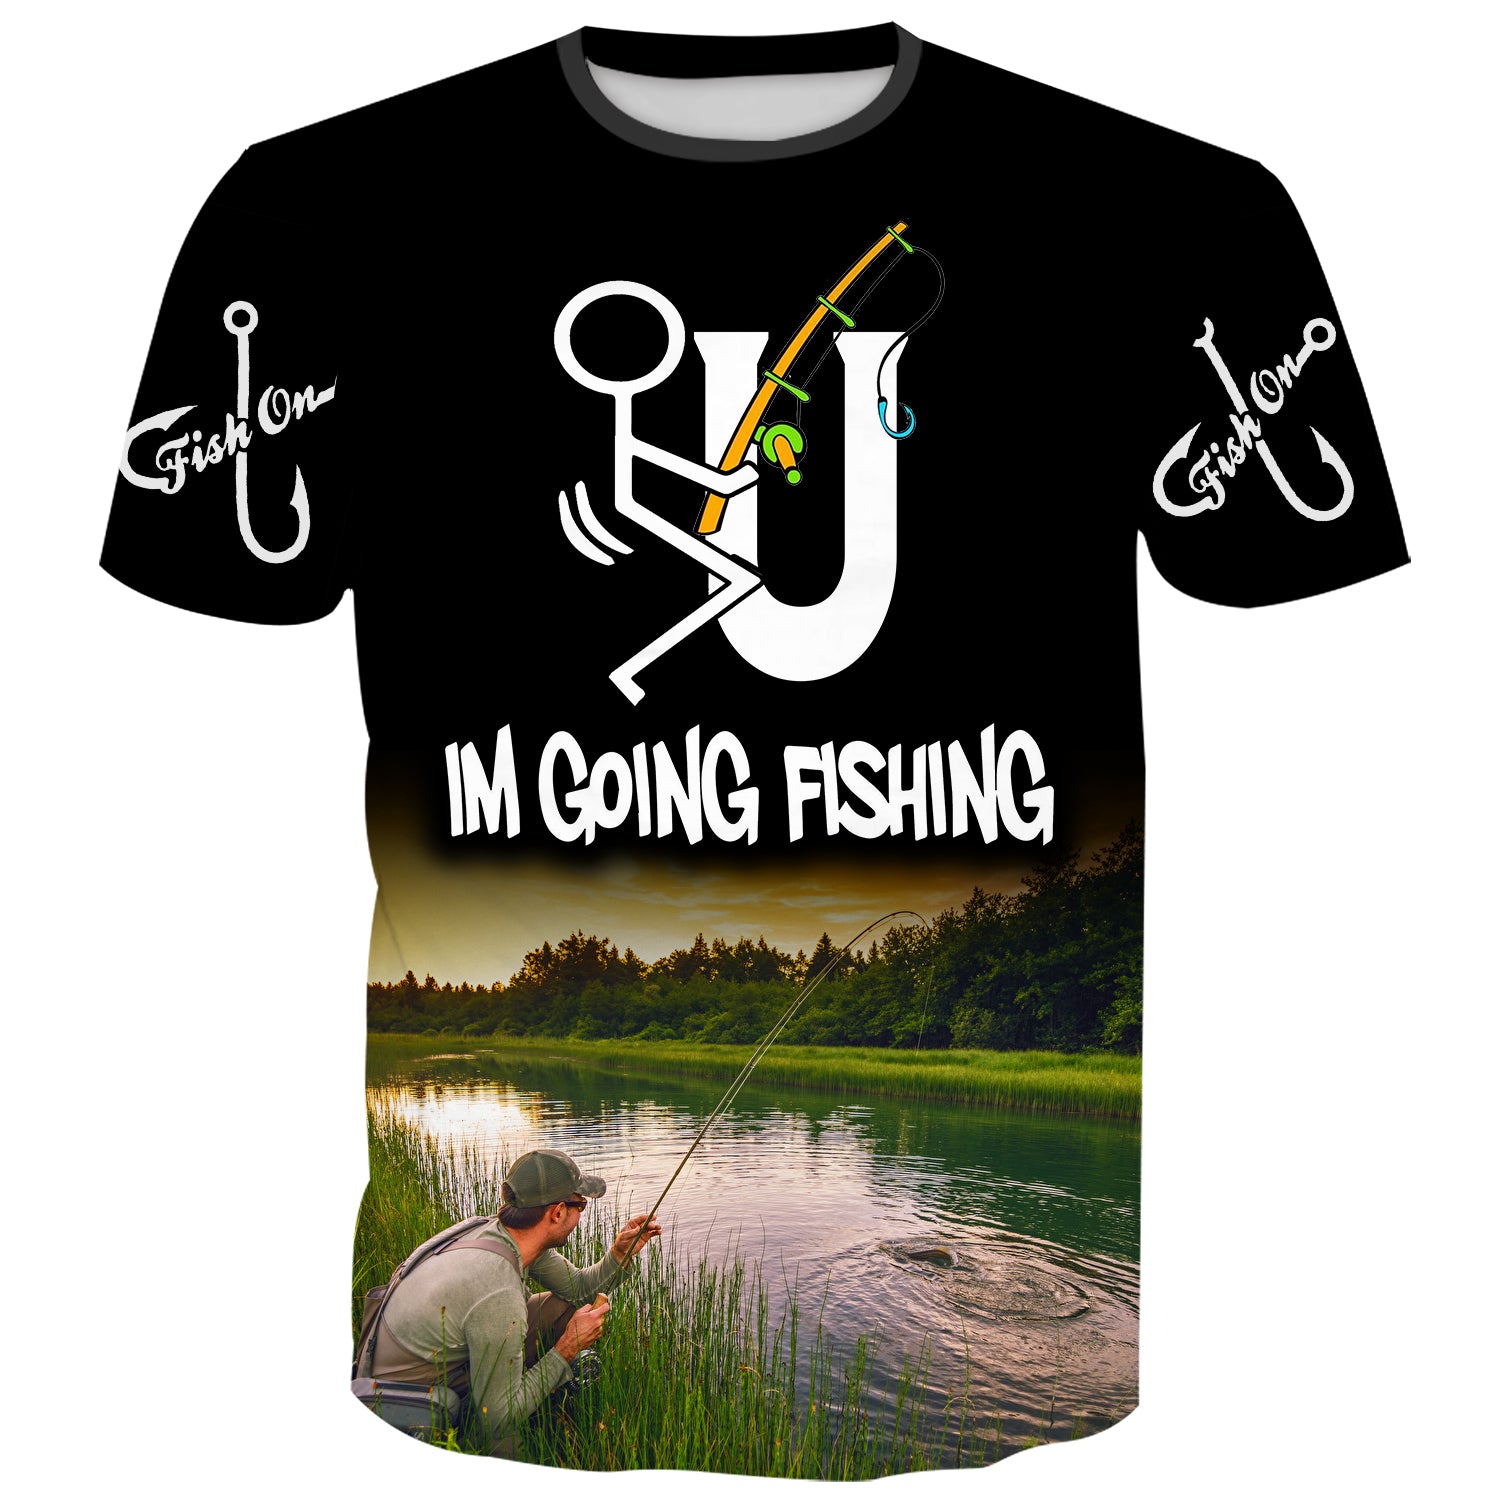 I am going Fishing - New T-Shirt